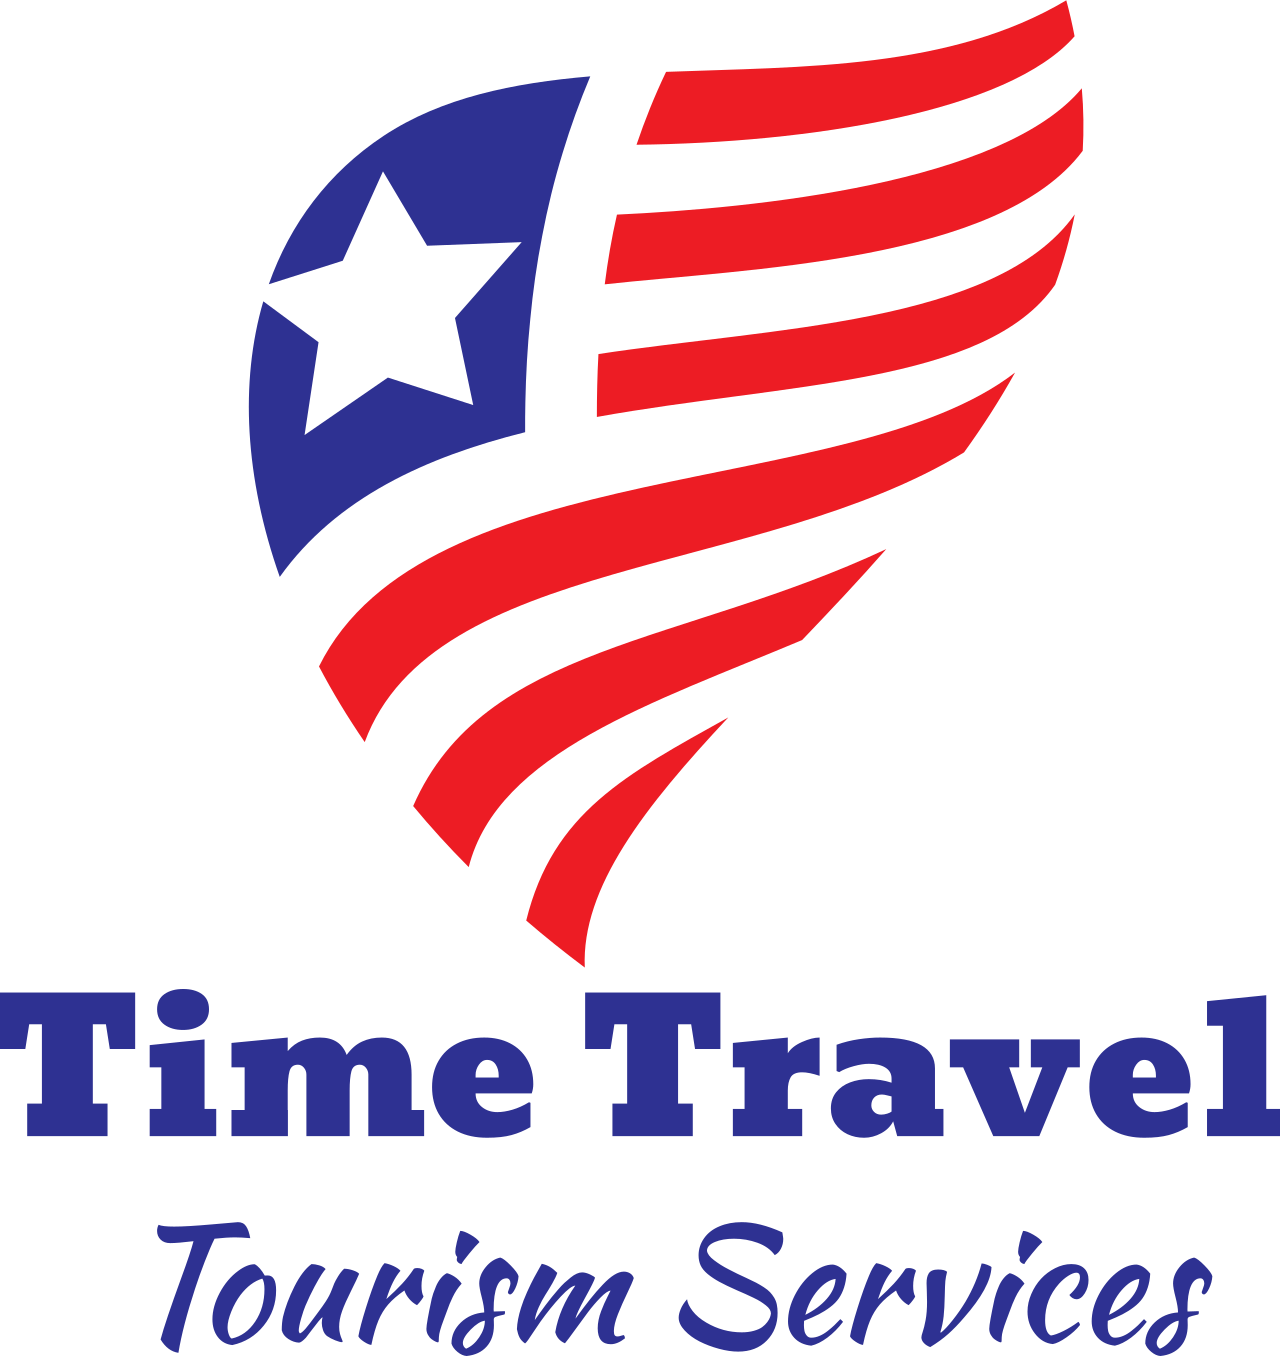 Time Travel 's logo